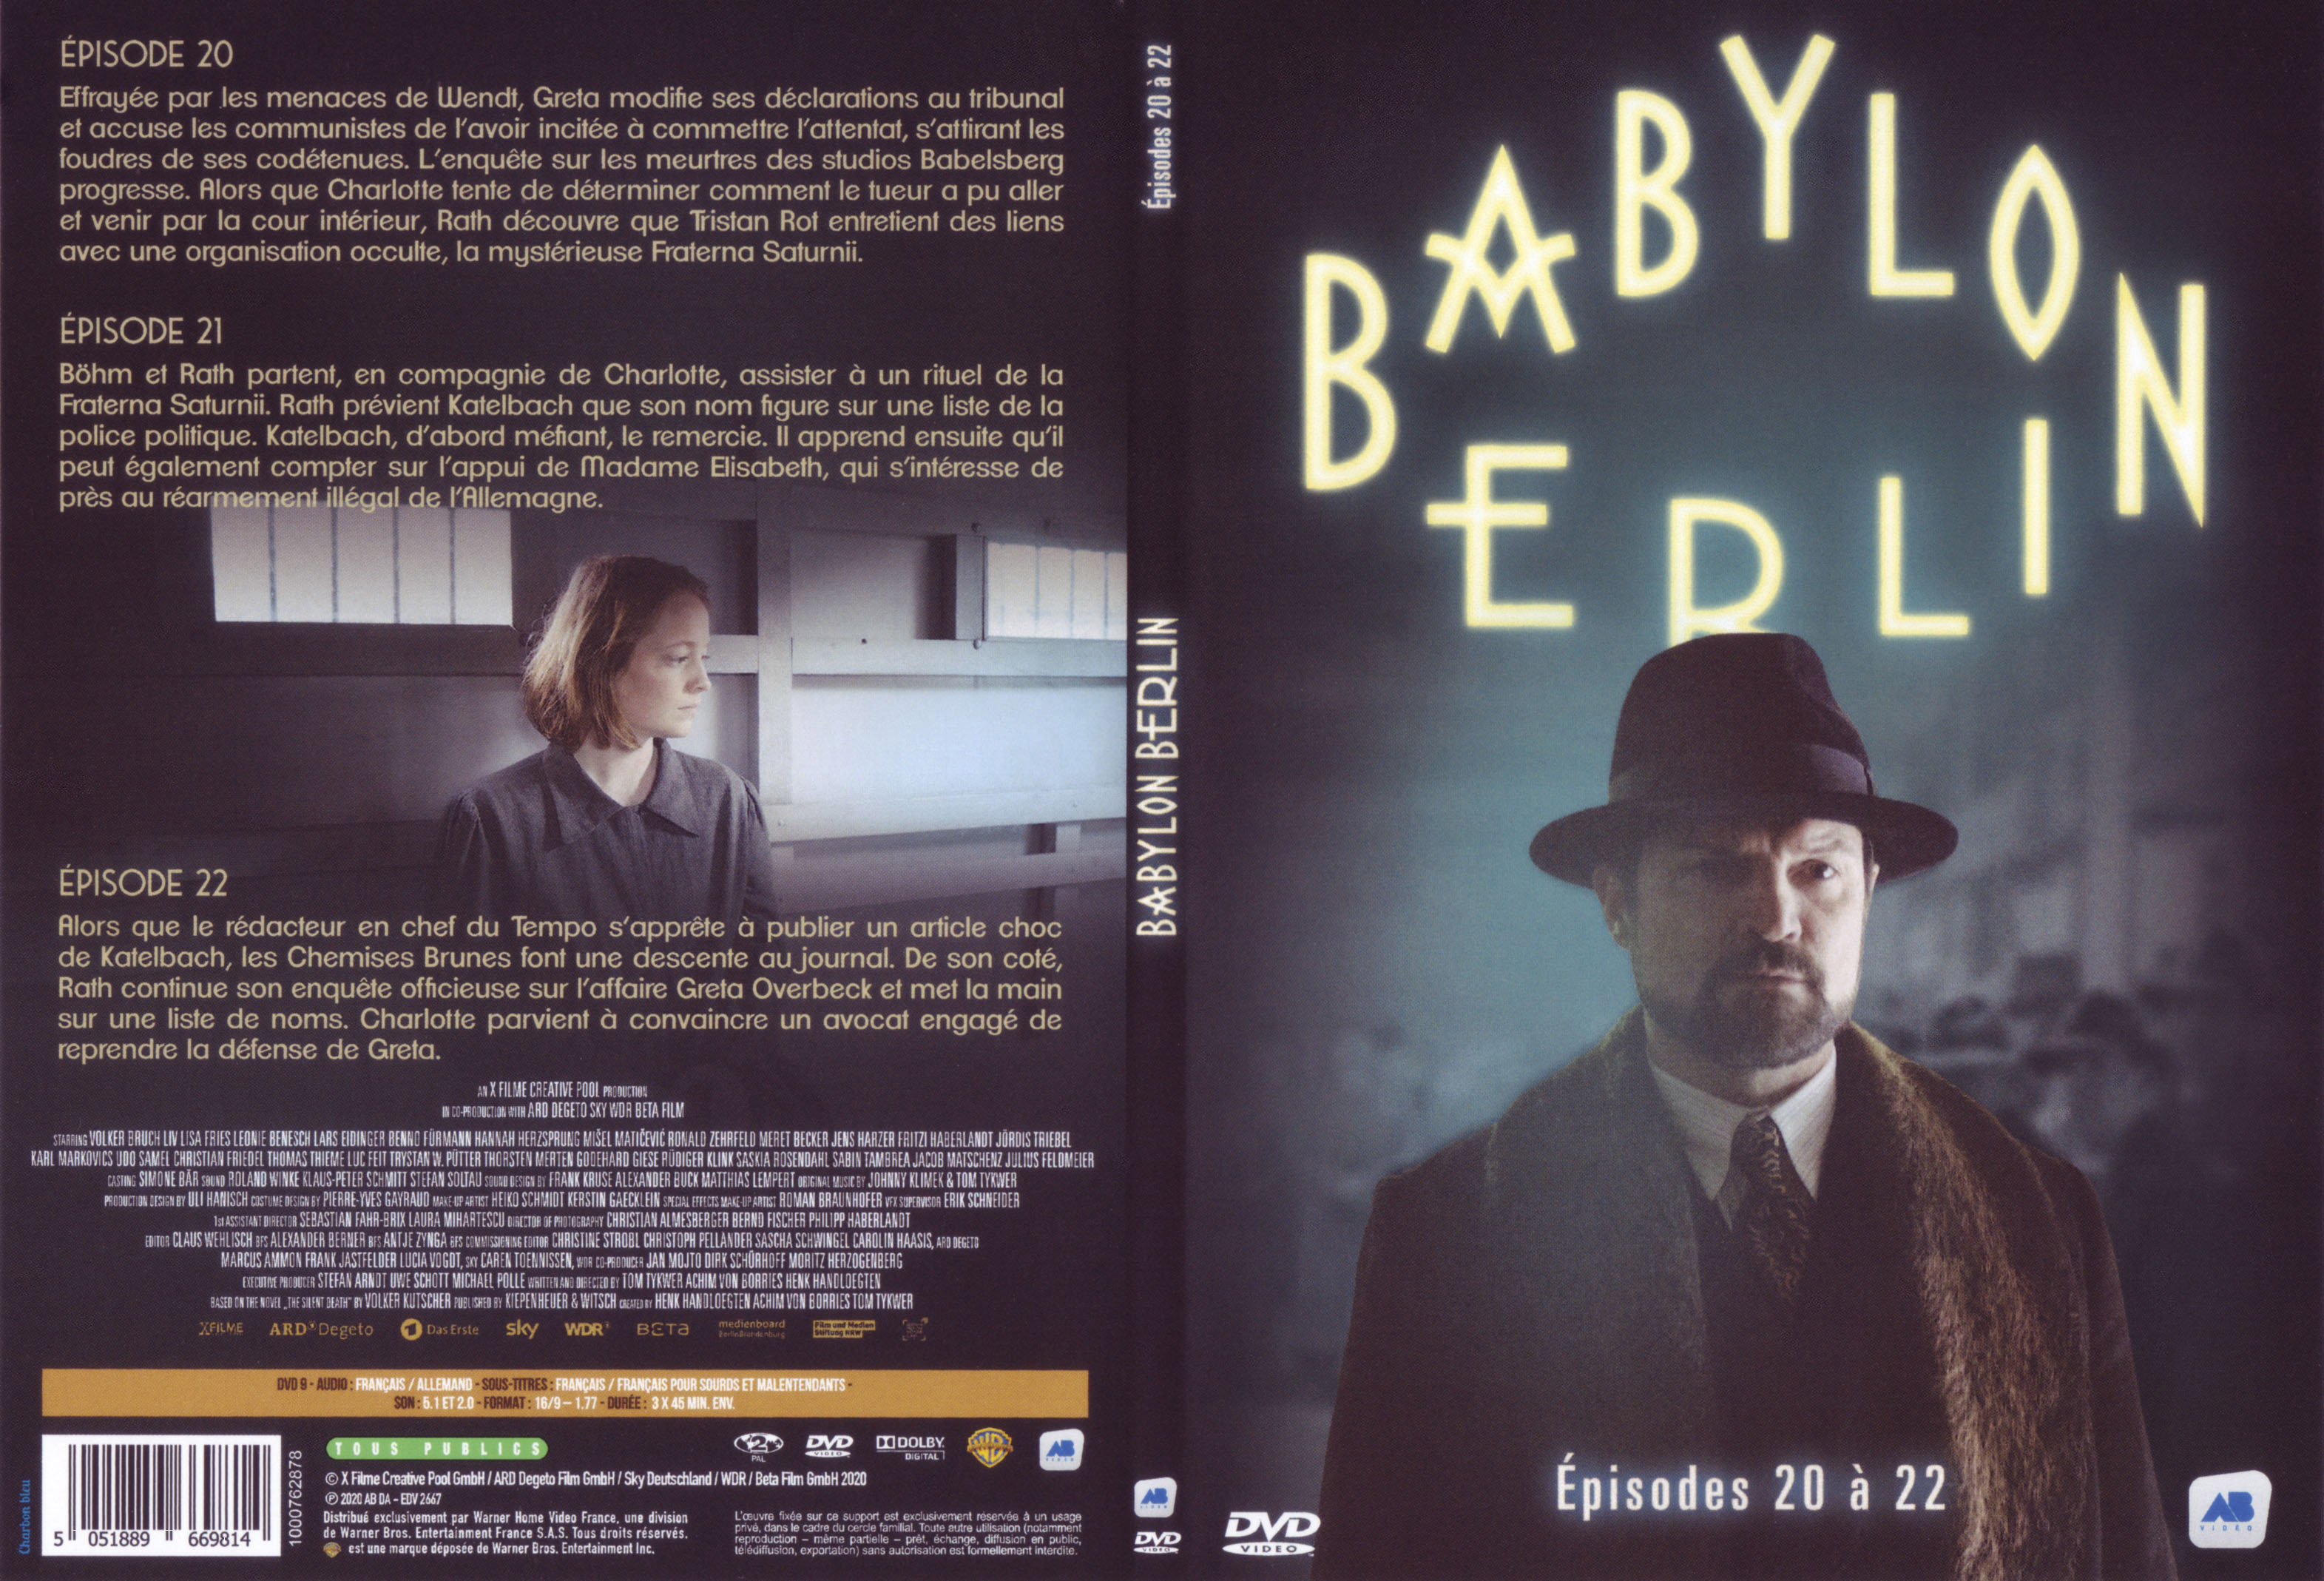 Jaquette DVD Babylon Berin Saison 3 Ep 20-22